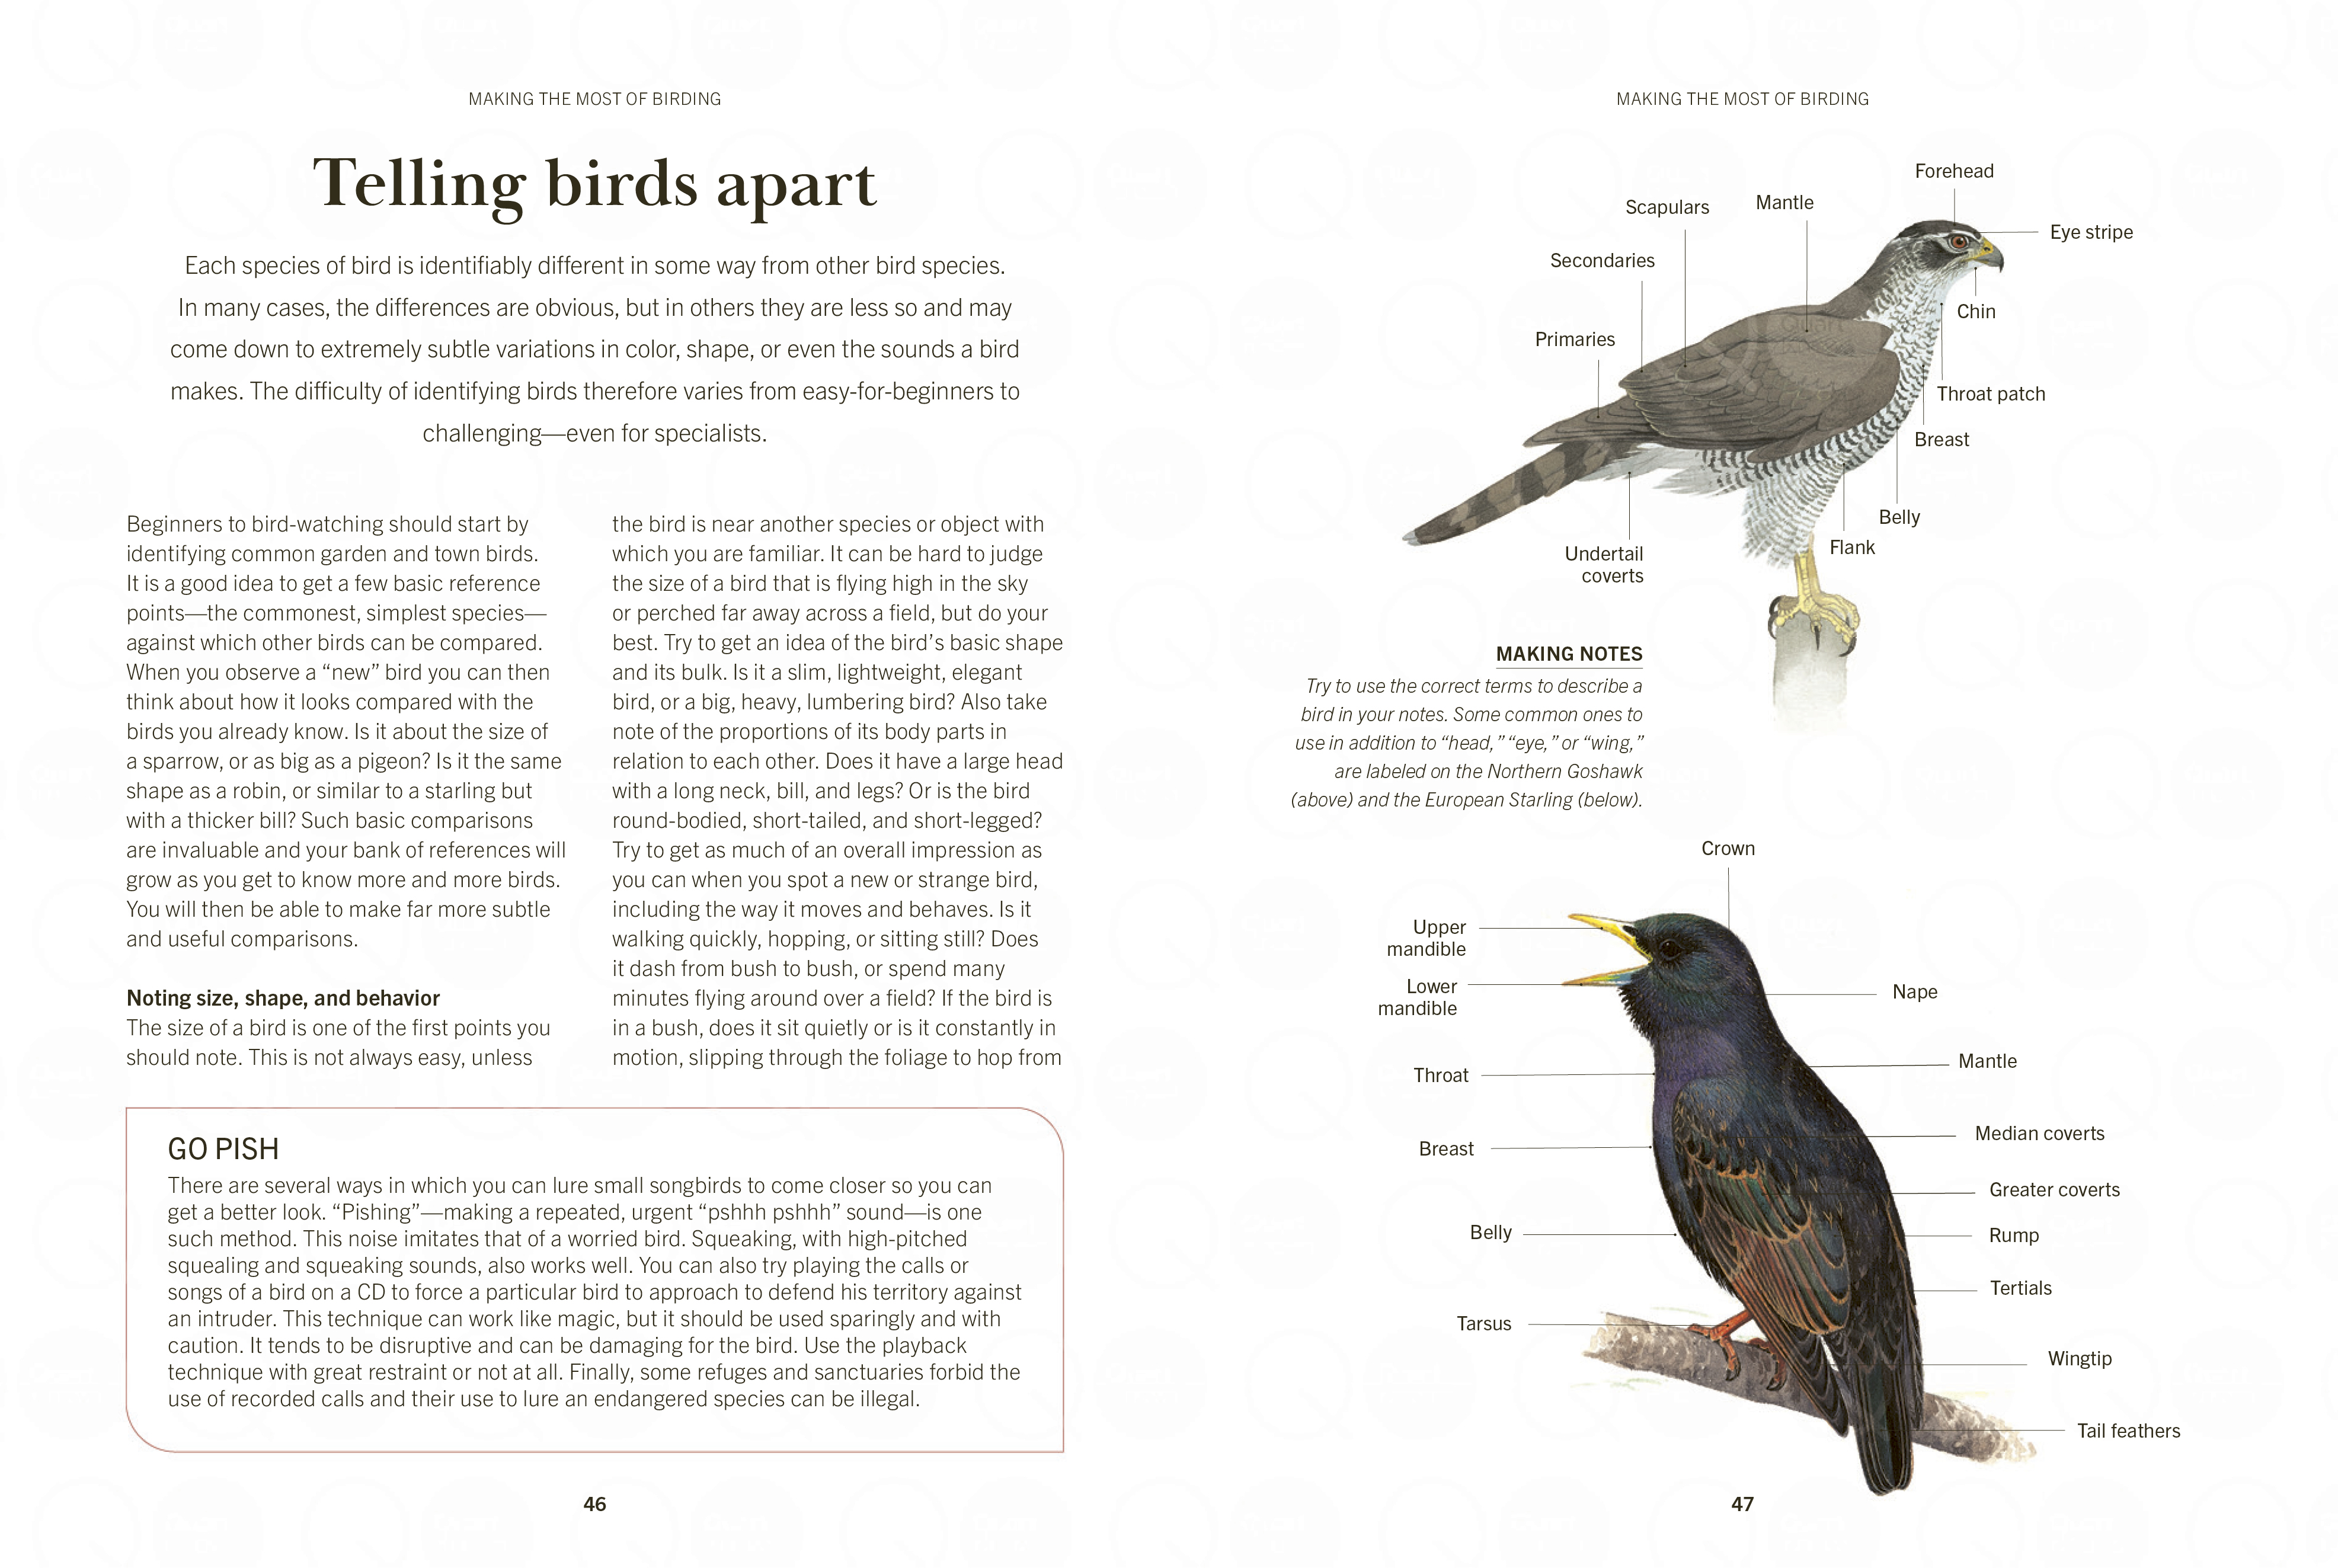 A Field Guide to Backyard Birds of North America